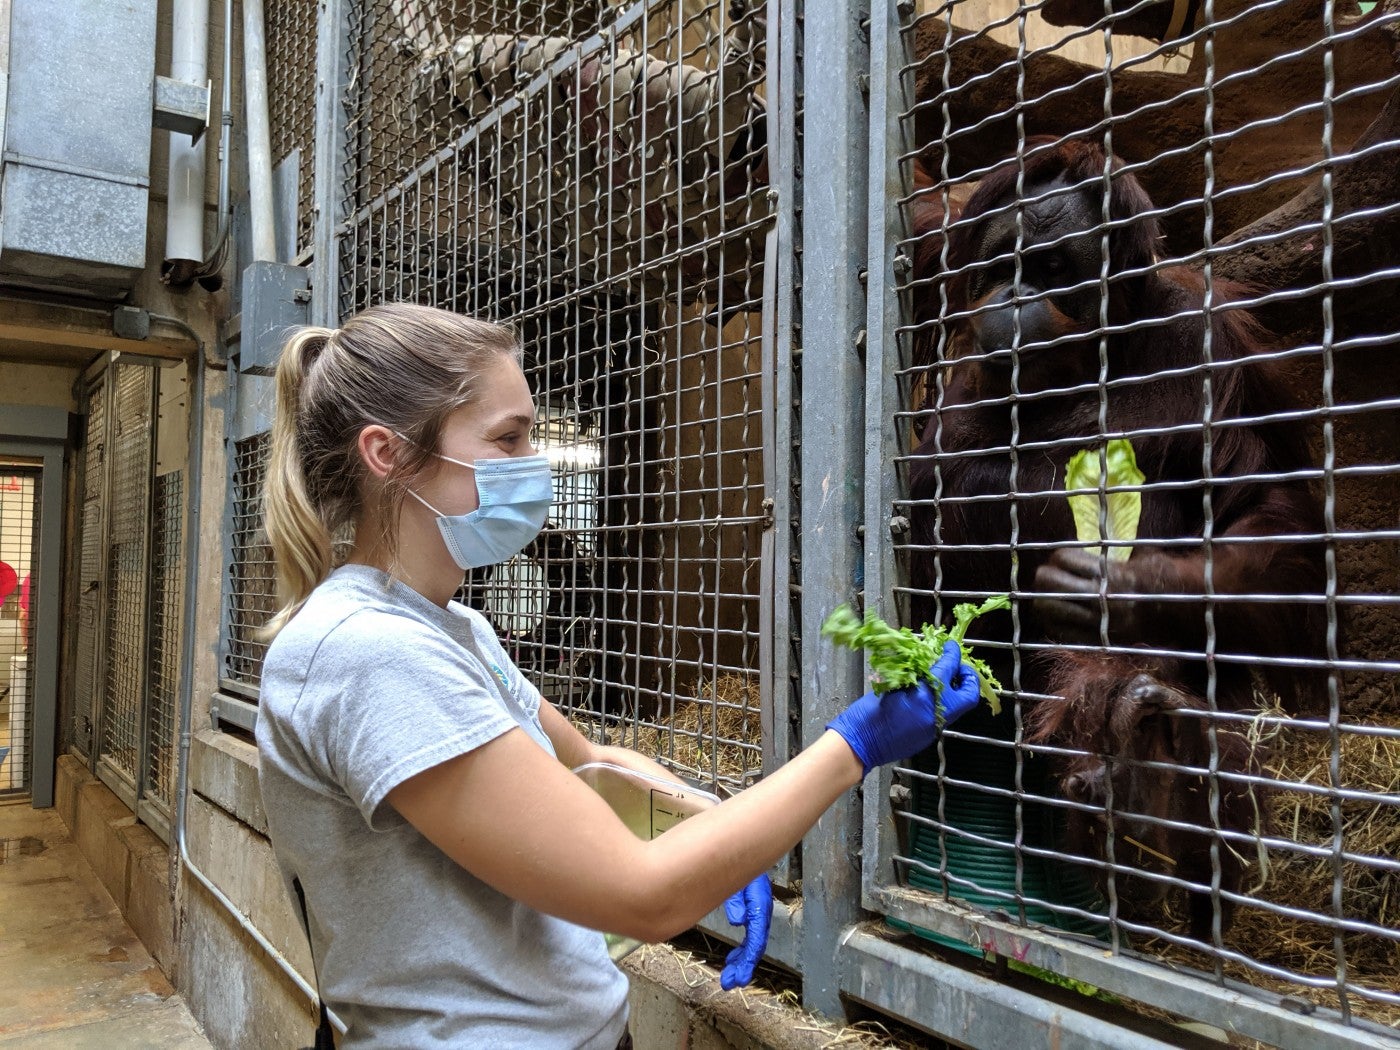 Primate keeper Emily Bricker gives orangutan, Bonnie, some lettuce.